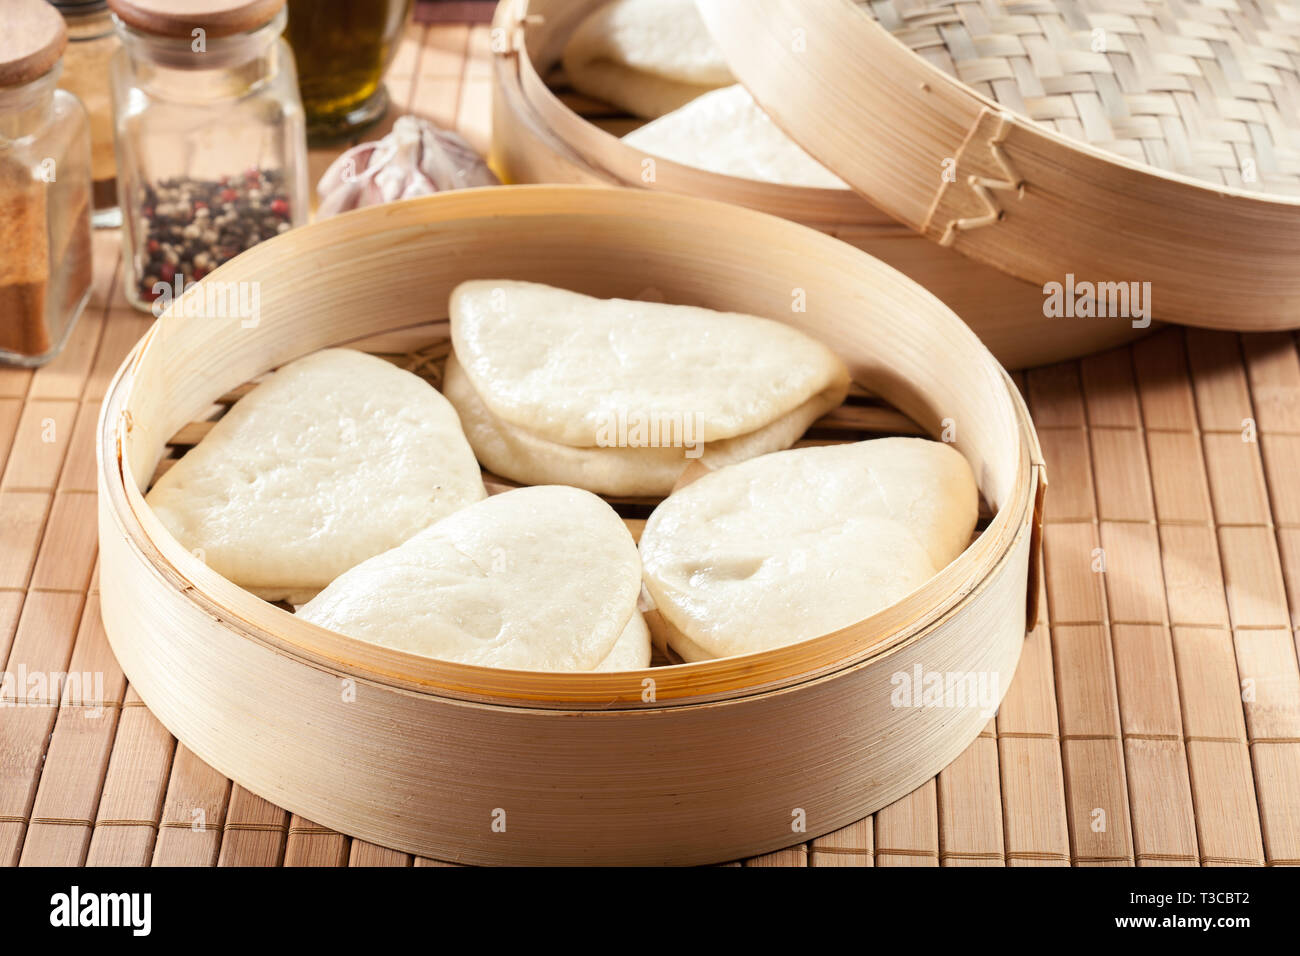 Gua bao, steamed buns in bamboo steamer. Asian cuisine Stock Photo